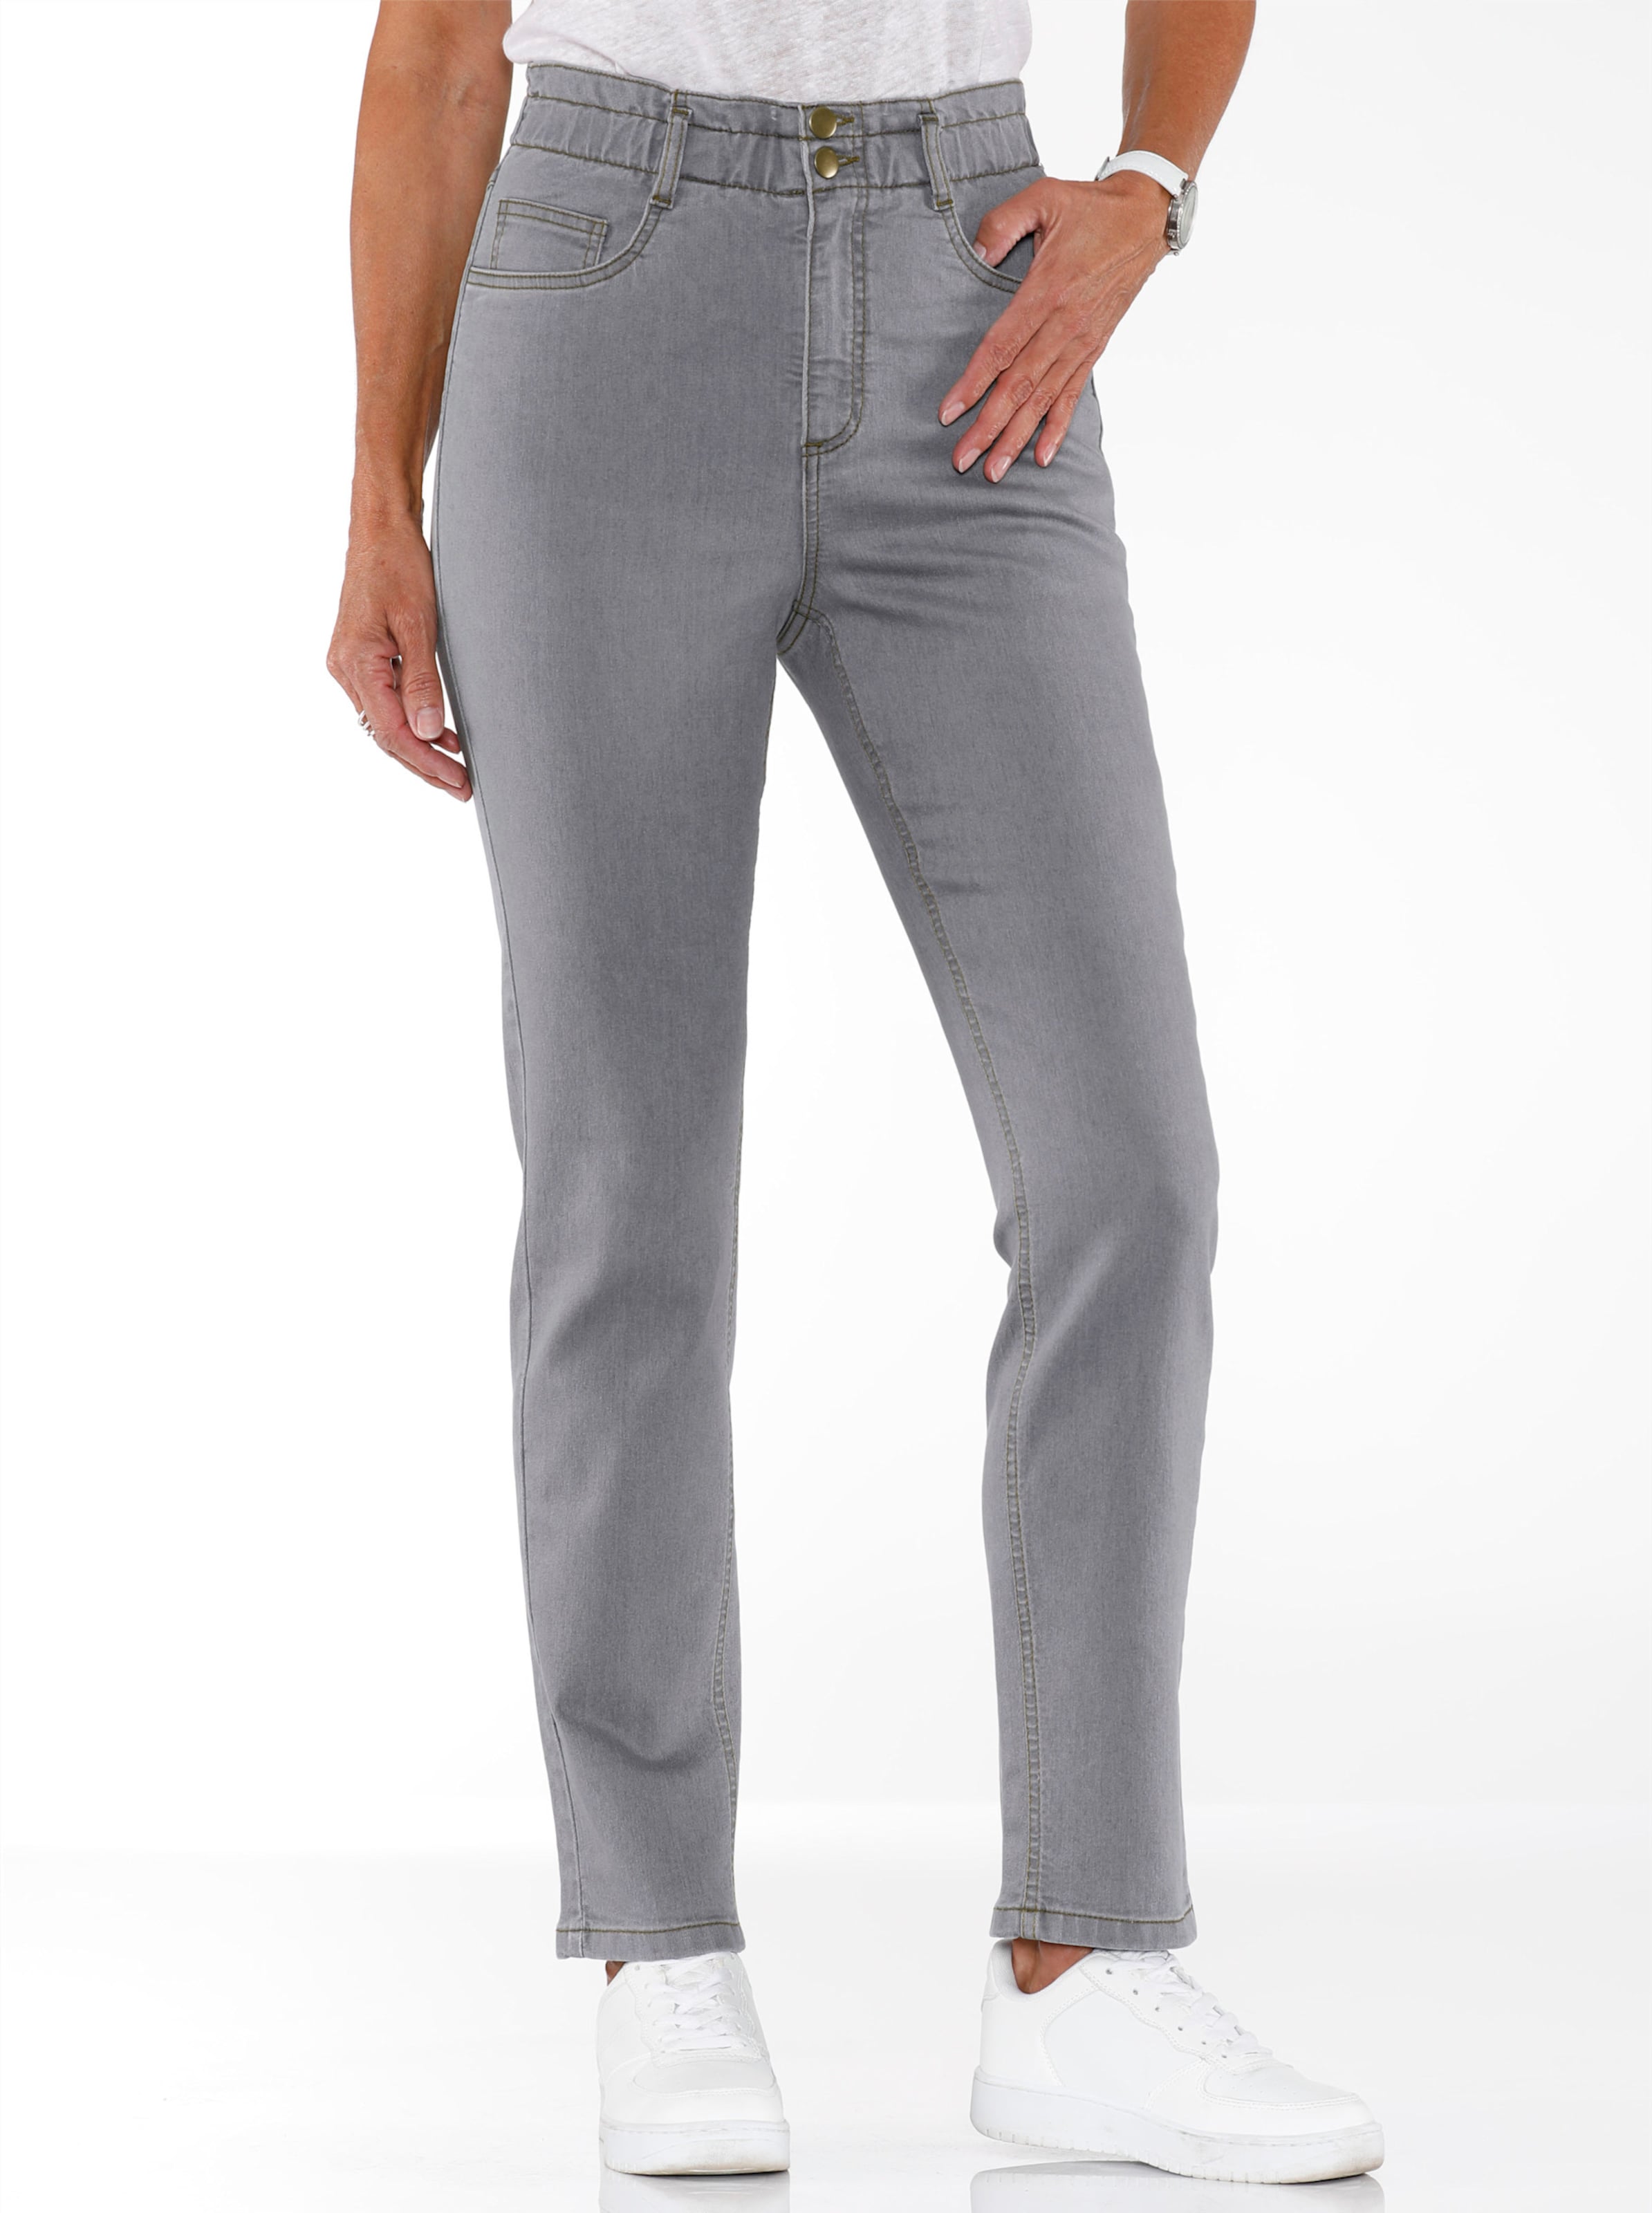 Witt Damen Jeans im aktuellen Paperbag-Schnitt, grey-denim